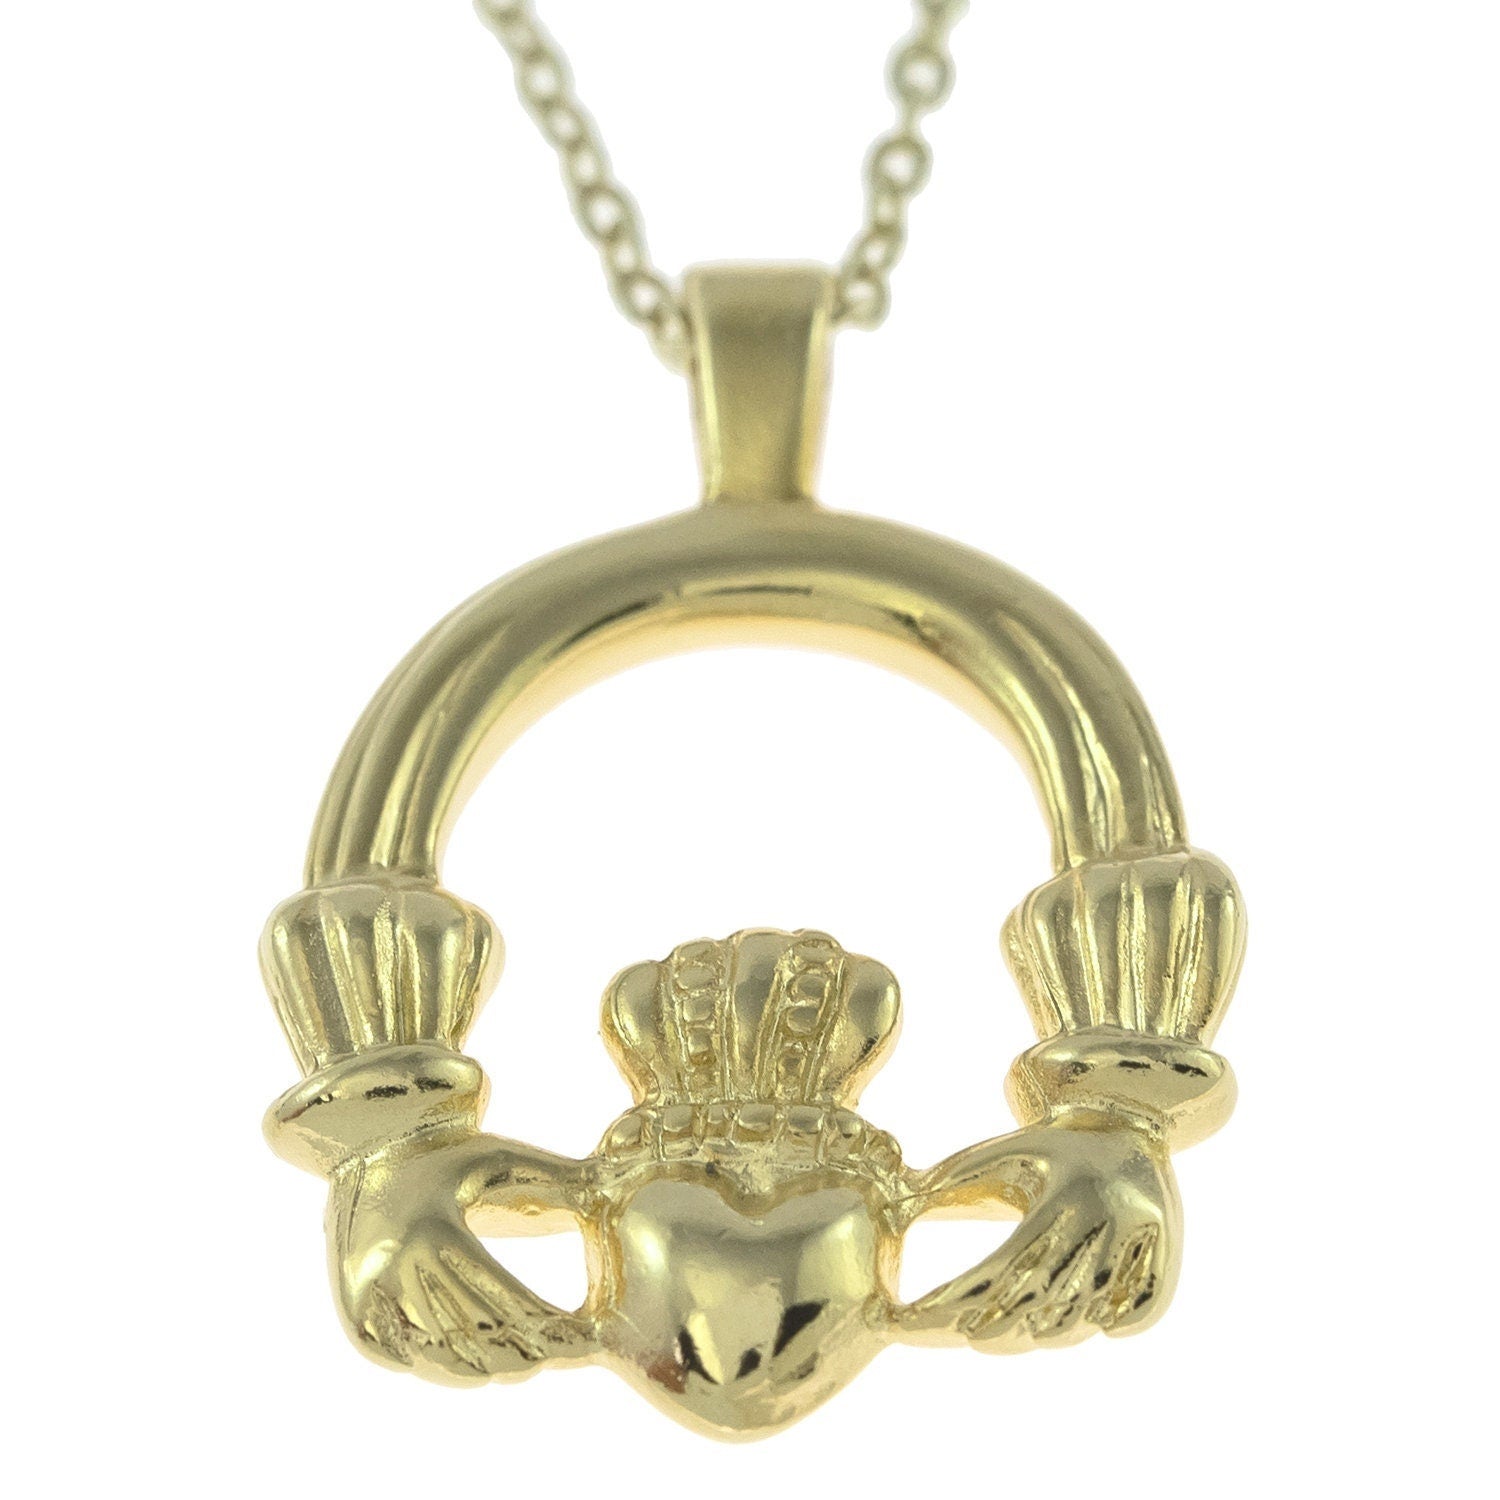 Irish Necklace - 14k Yellow Gold Claddagh Pendant with Chain - Large at  IrishShop.com | IJSV04415